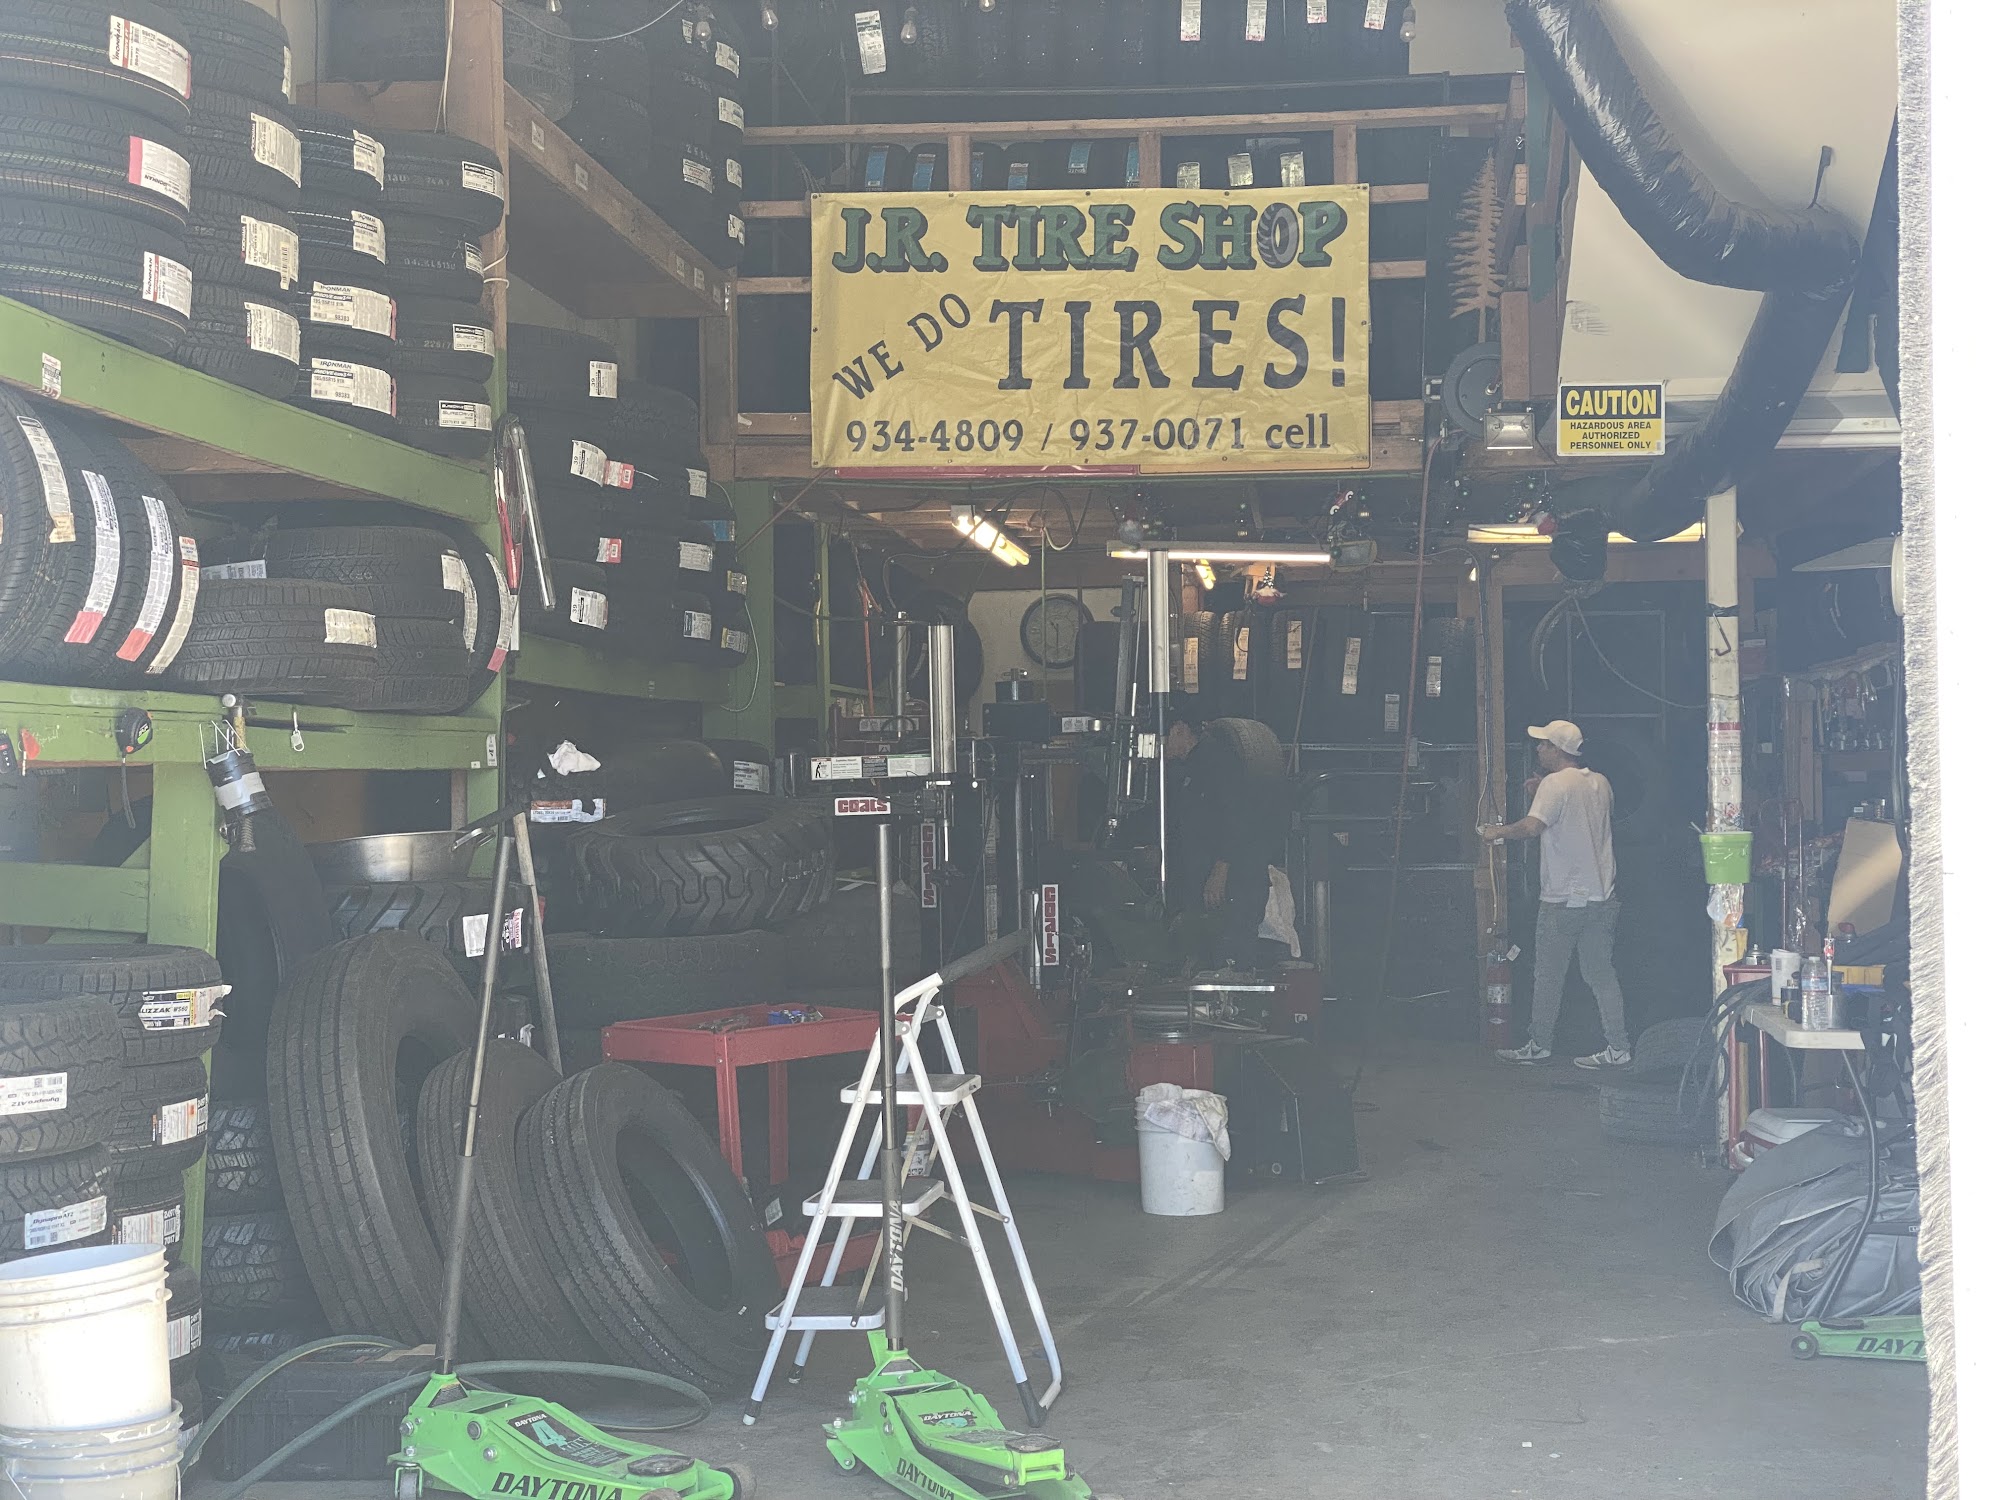 JR Tire Shop